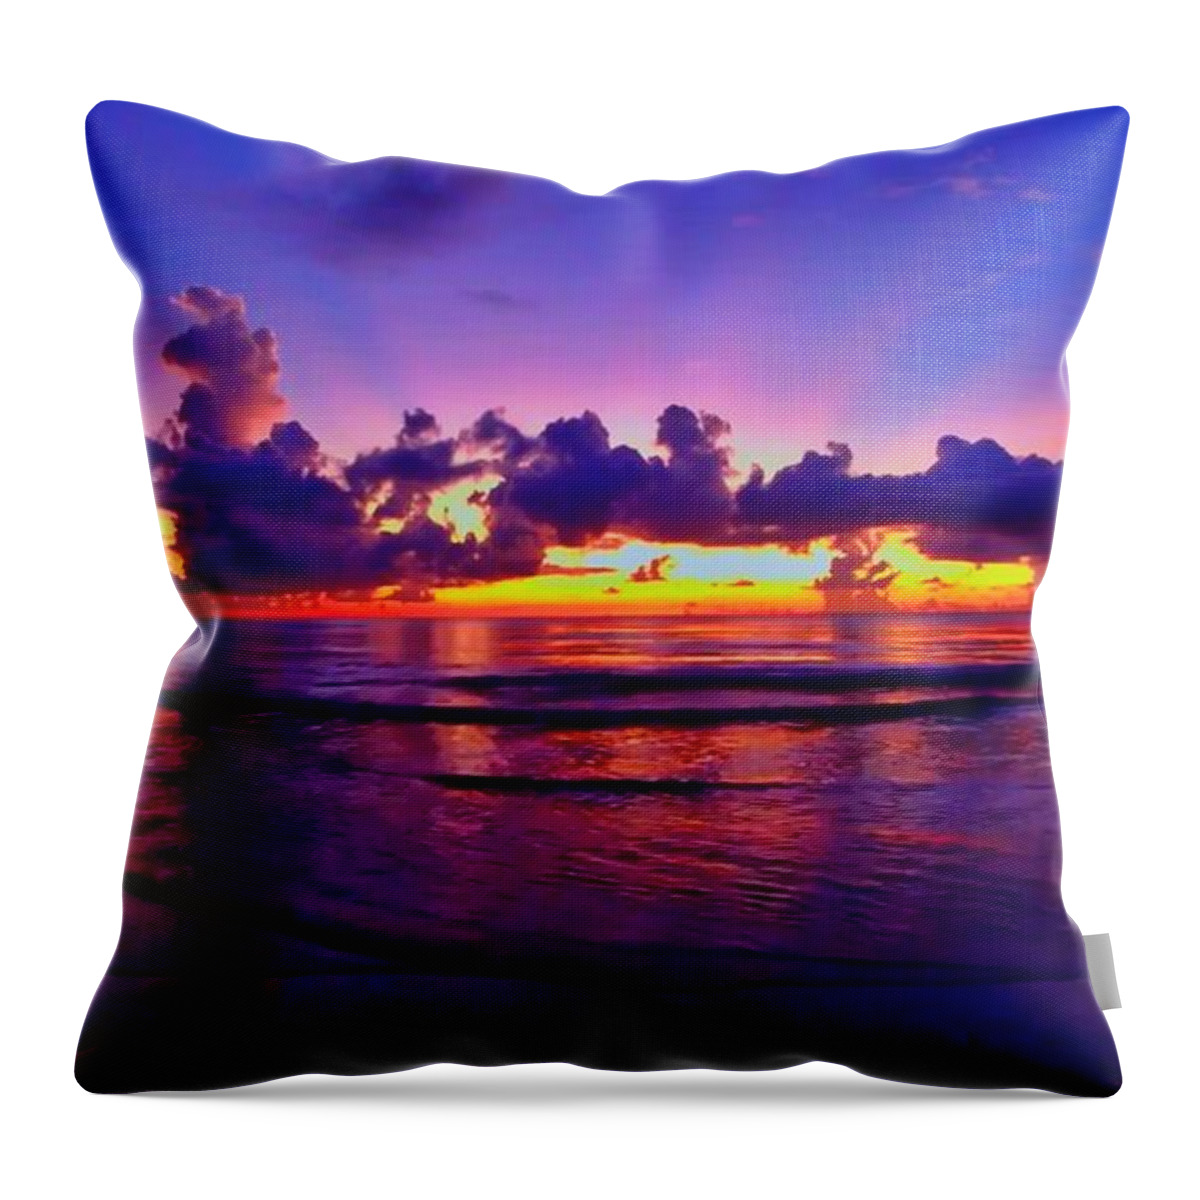 Sunrise Throw Pillow featuring the photograph Sunrise Beach 26 by Rip Read